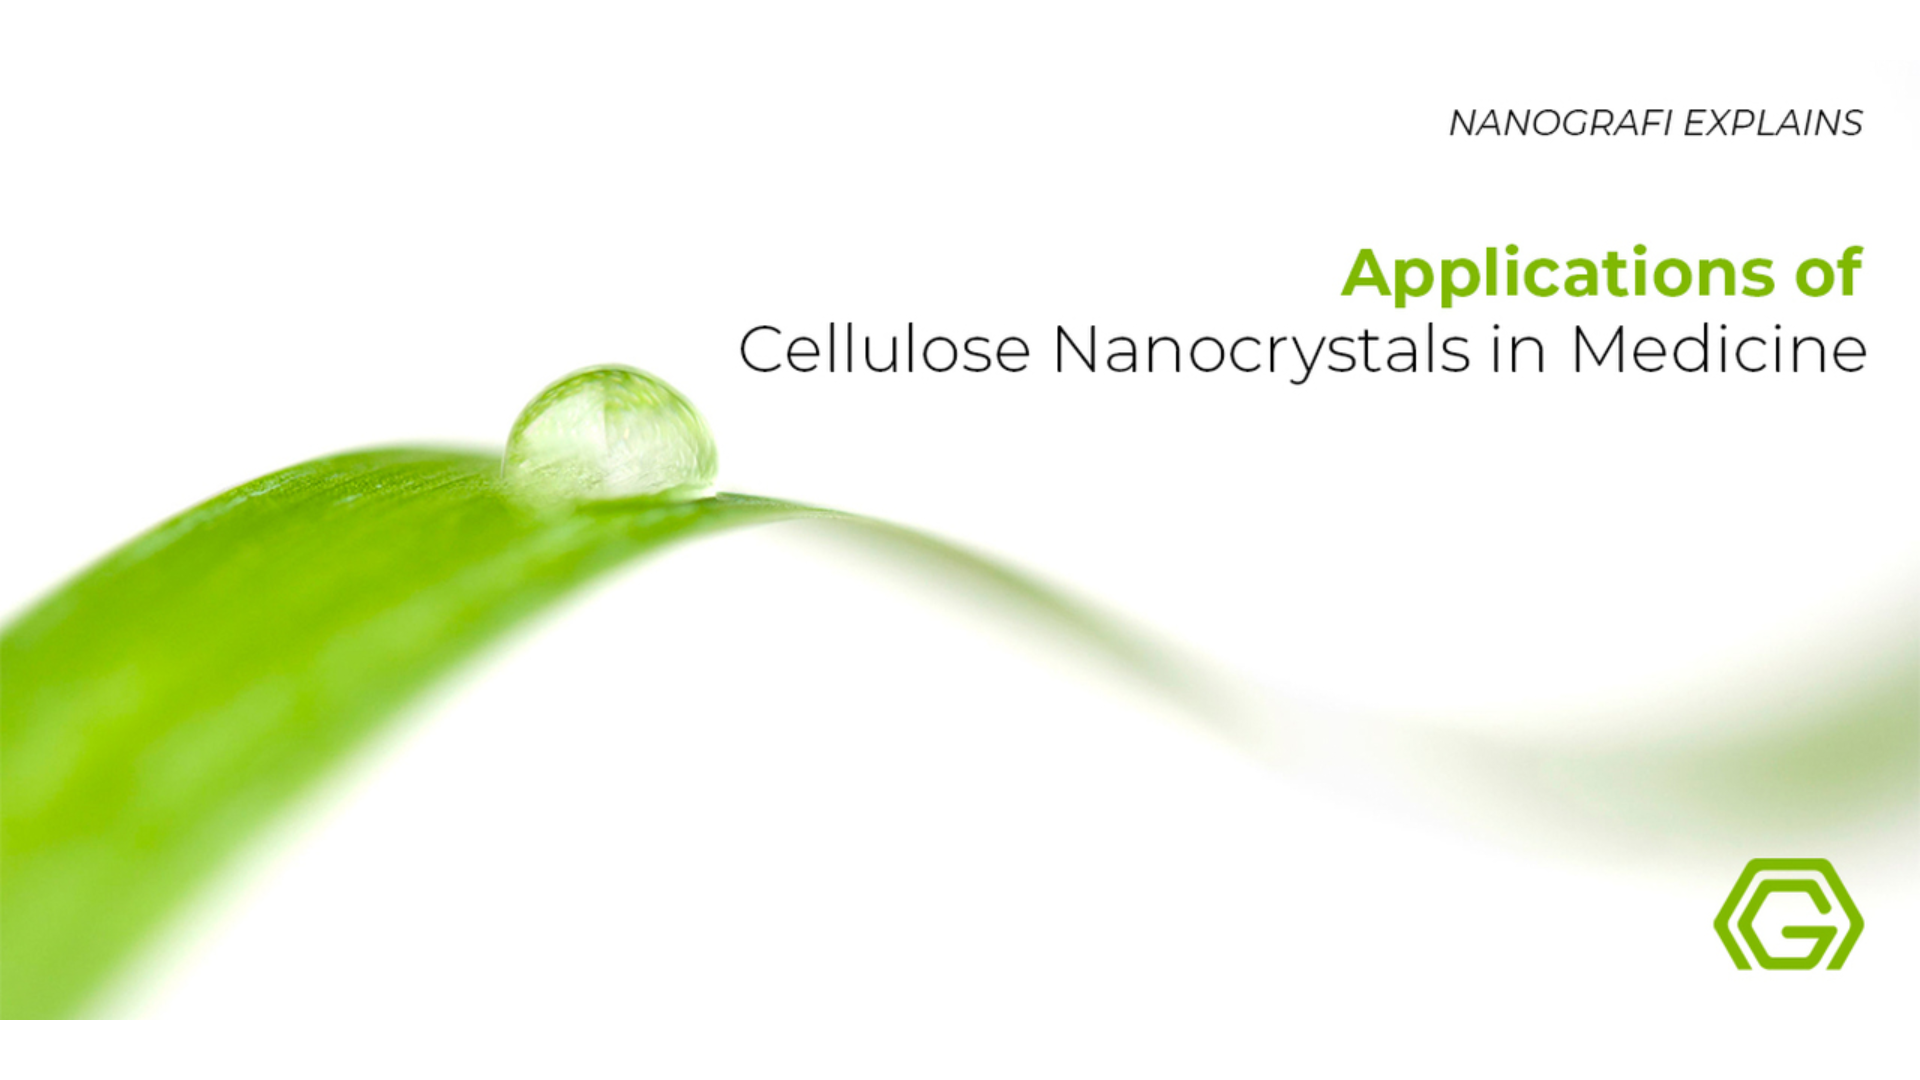 Applications of cellulose nanocrystals (CNC) in medicine